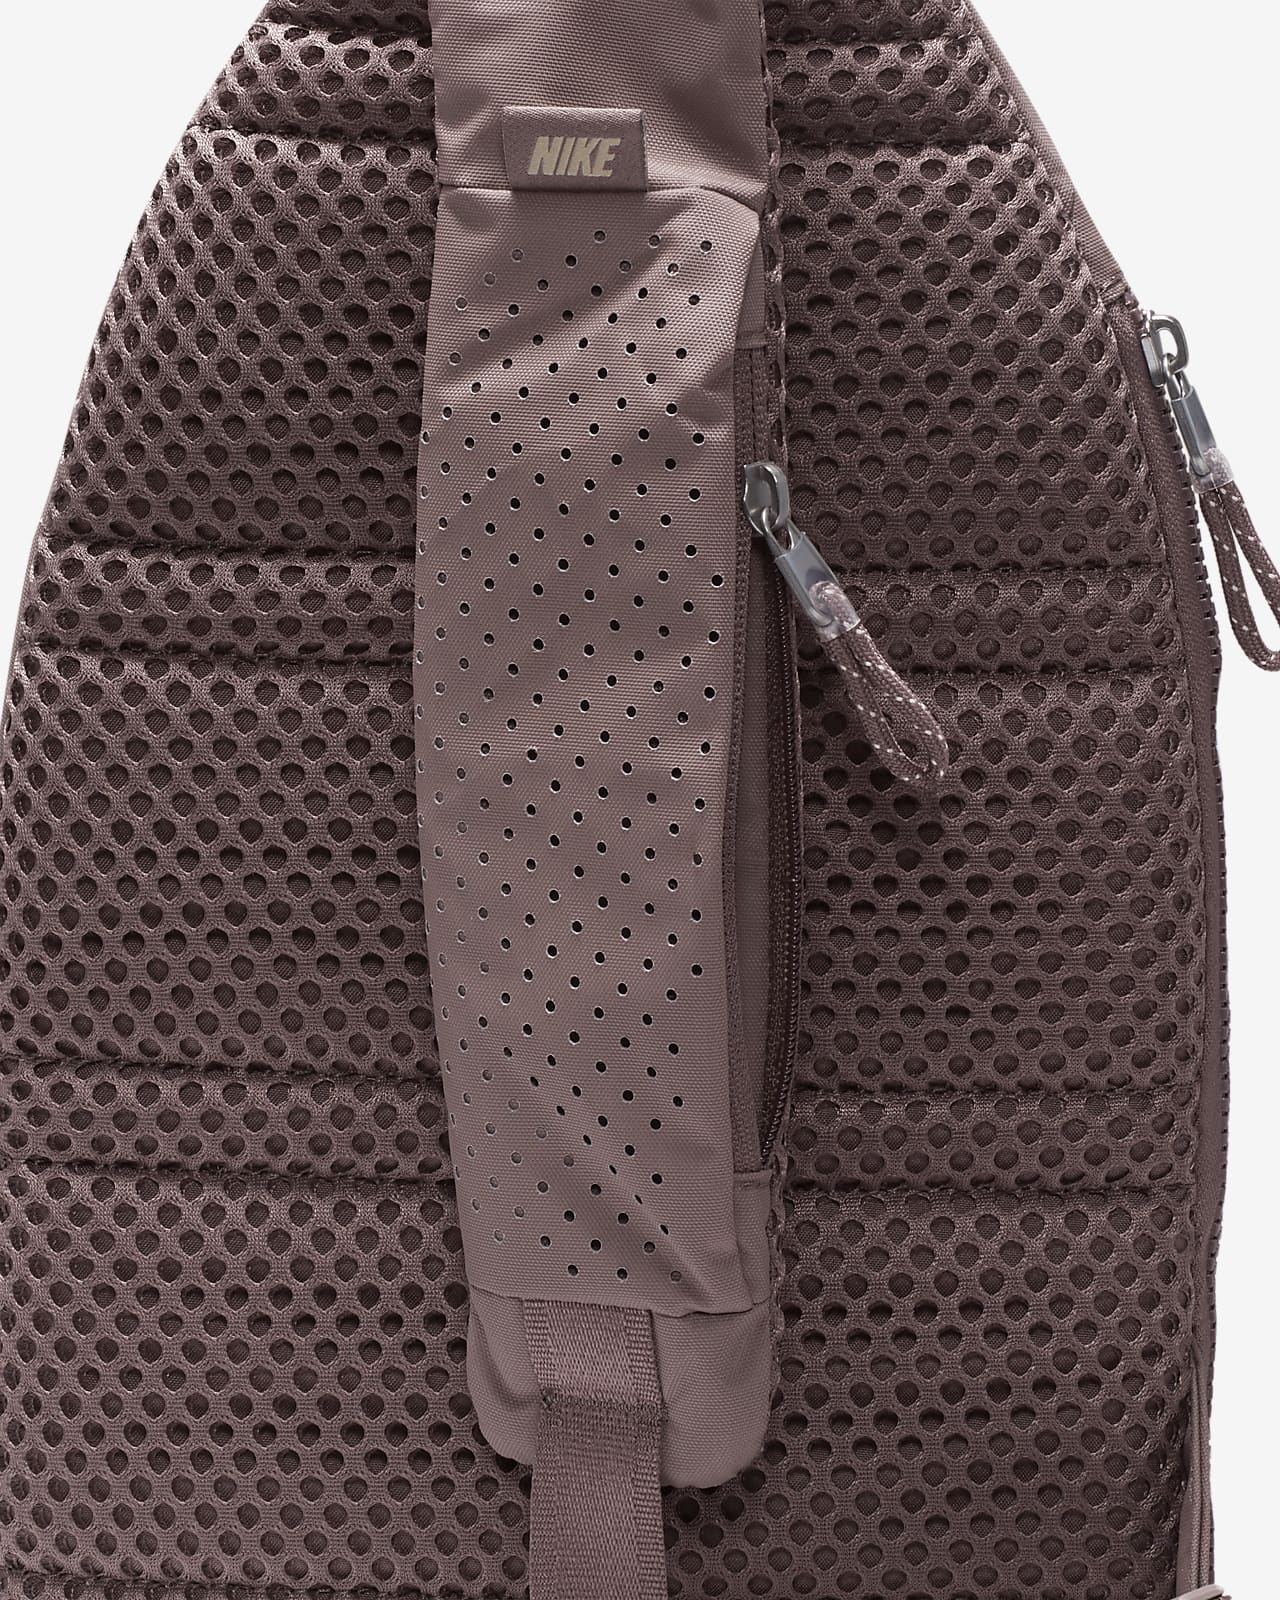 Coach bag men set 100% authentic Brand New With... - Depop